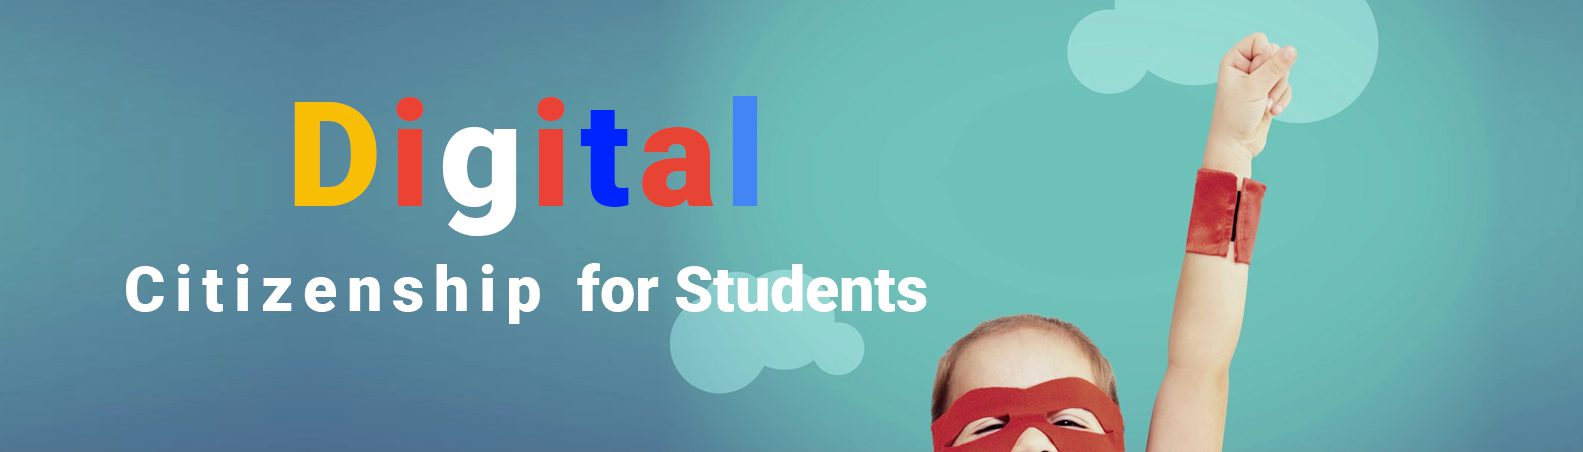 digital citizenship_students